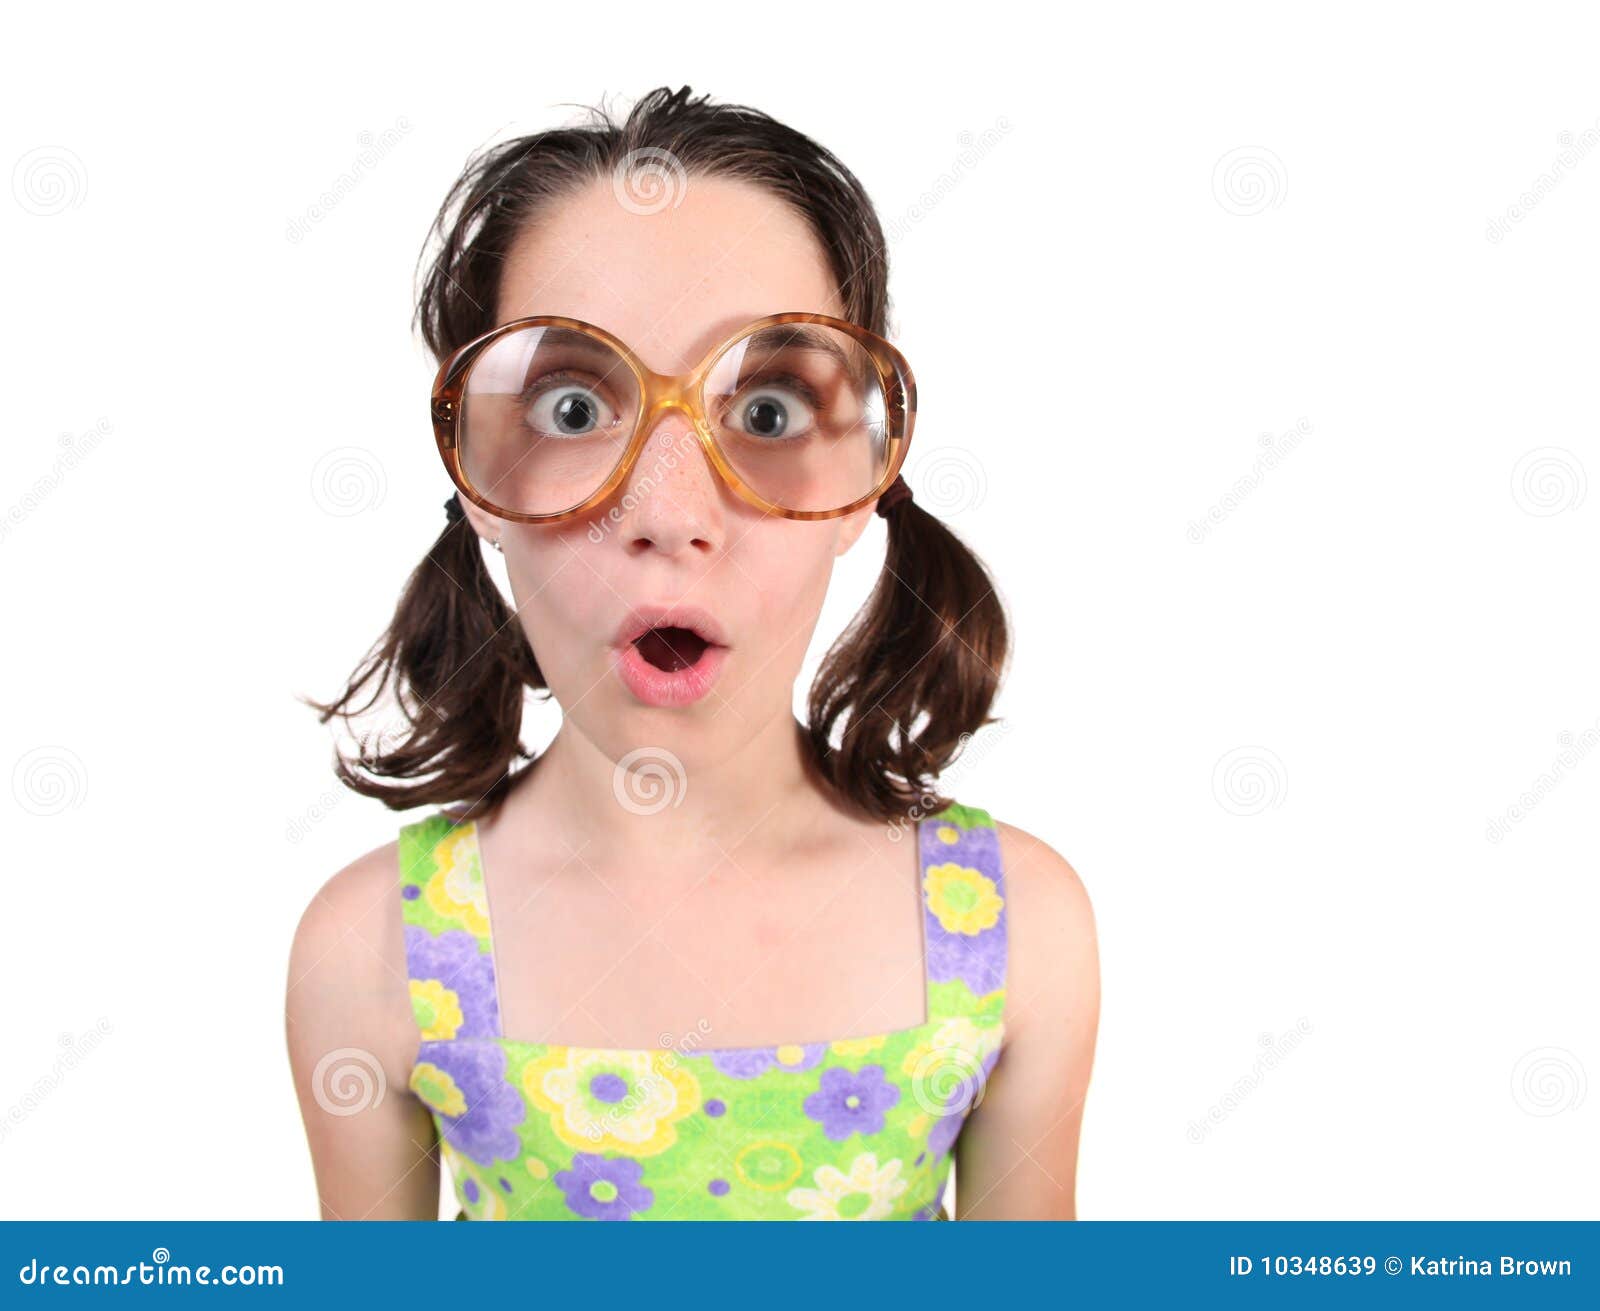 Funny Nerdy Girl Wearing Eyeglasses On White Backg Royalty Free Stock